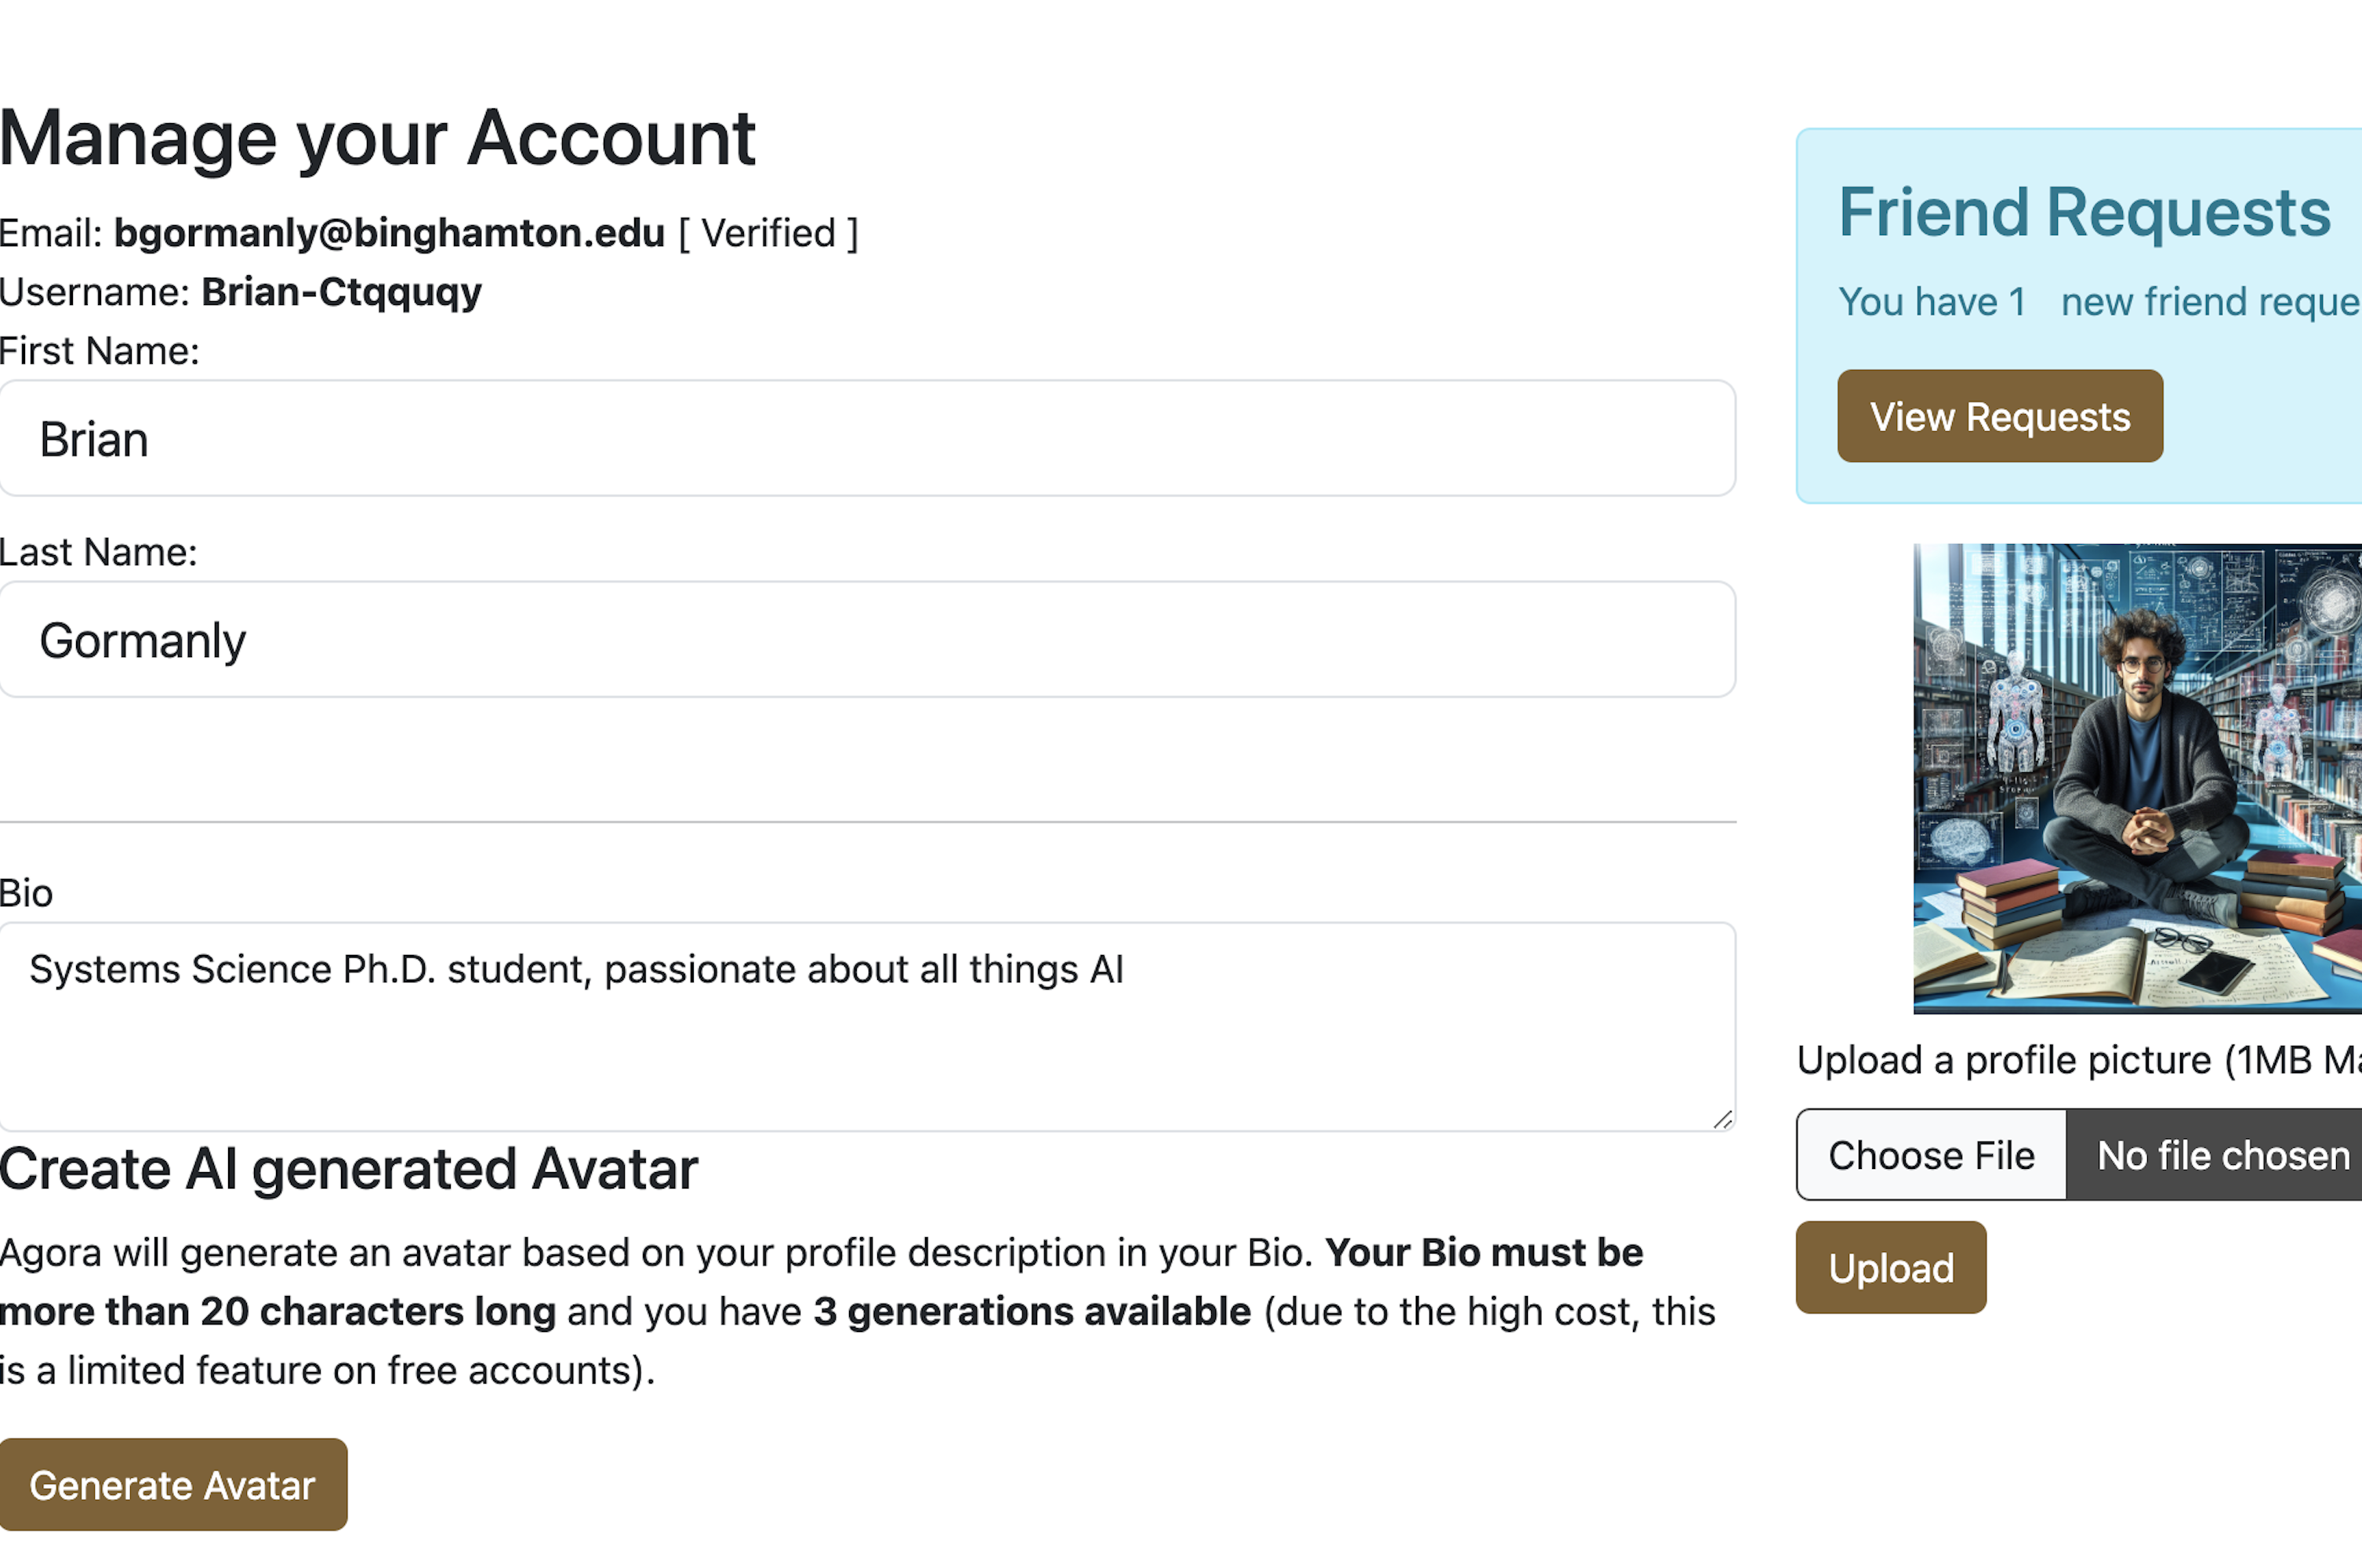 Agora will generate custom Avartar based on your profile